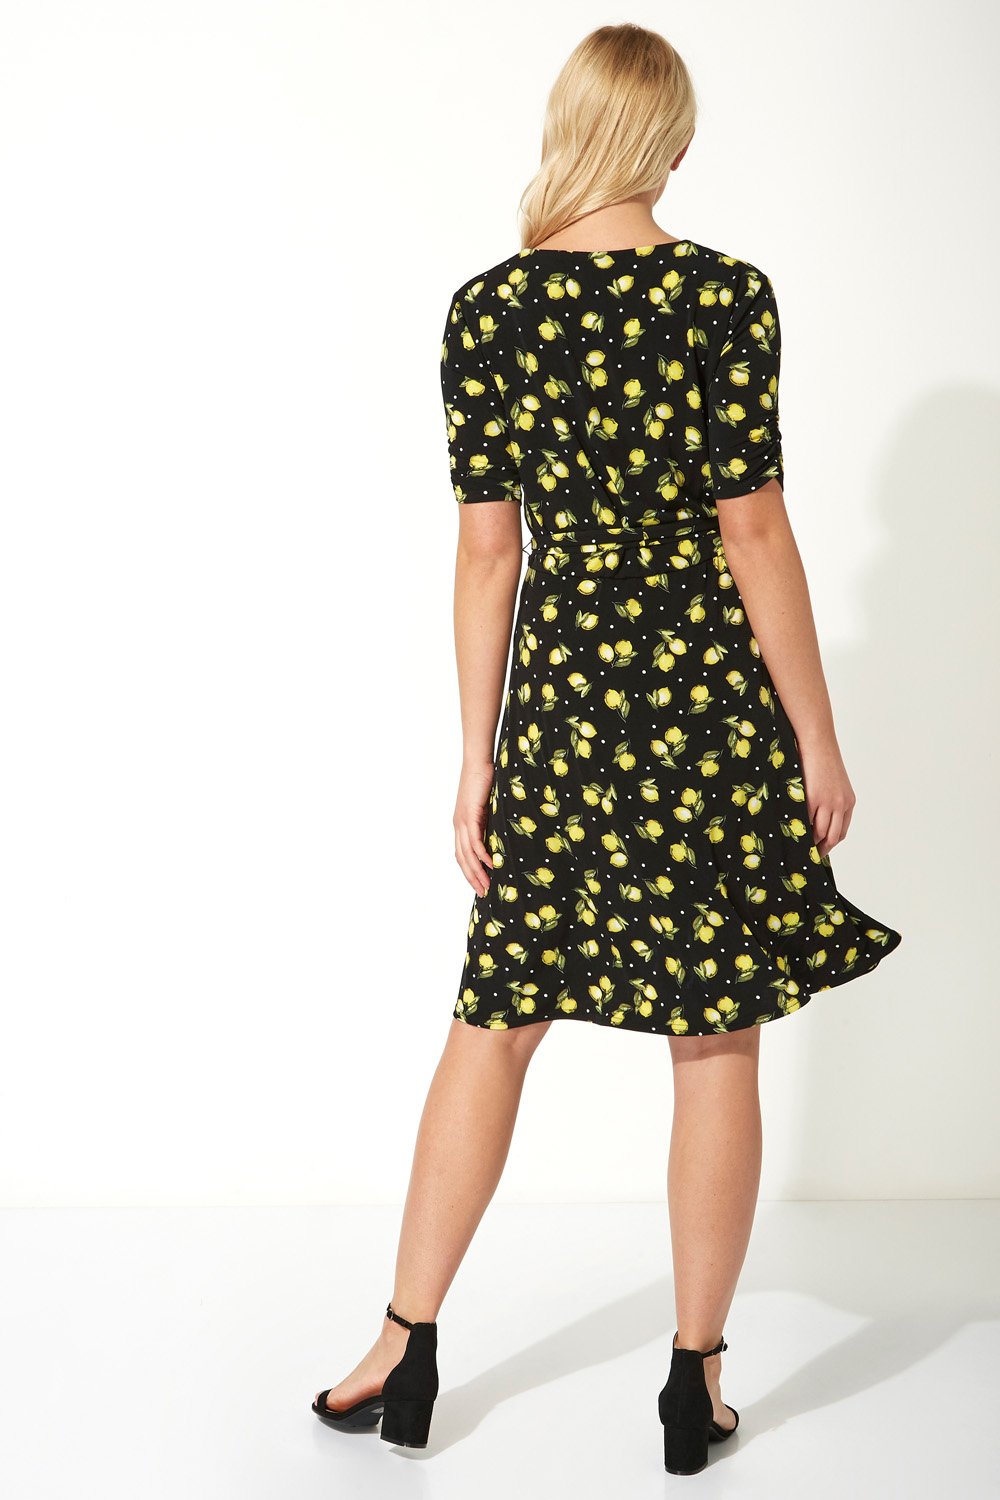 Black Lemon Print Wrap Dress, Image 4 of 5